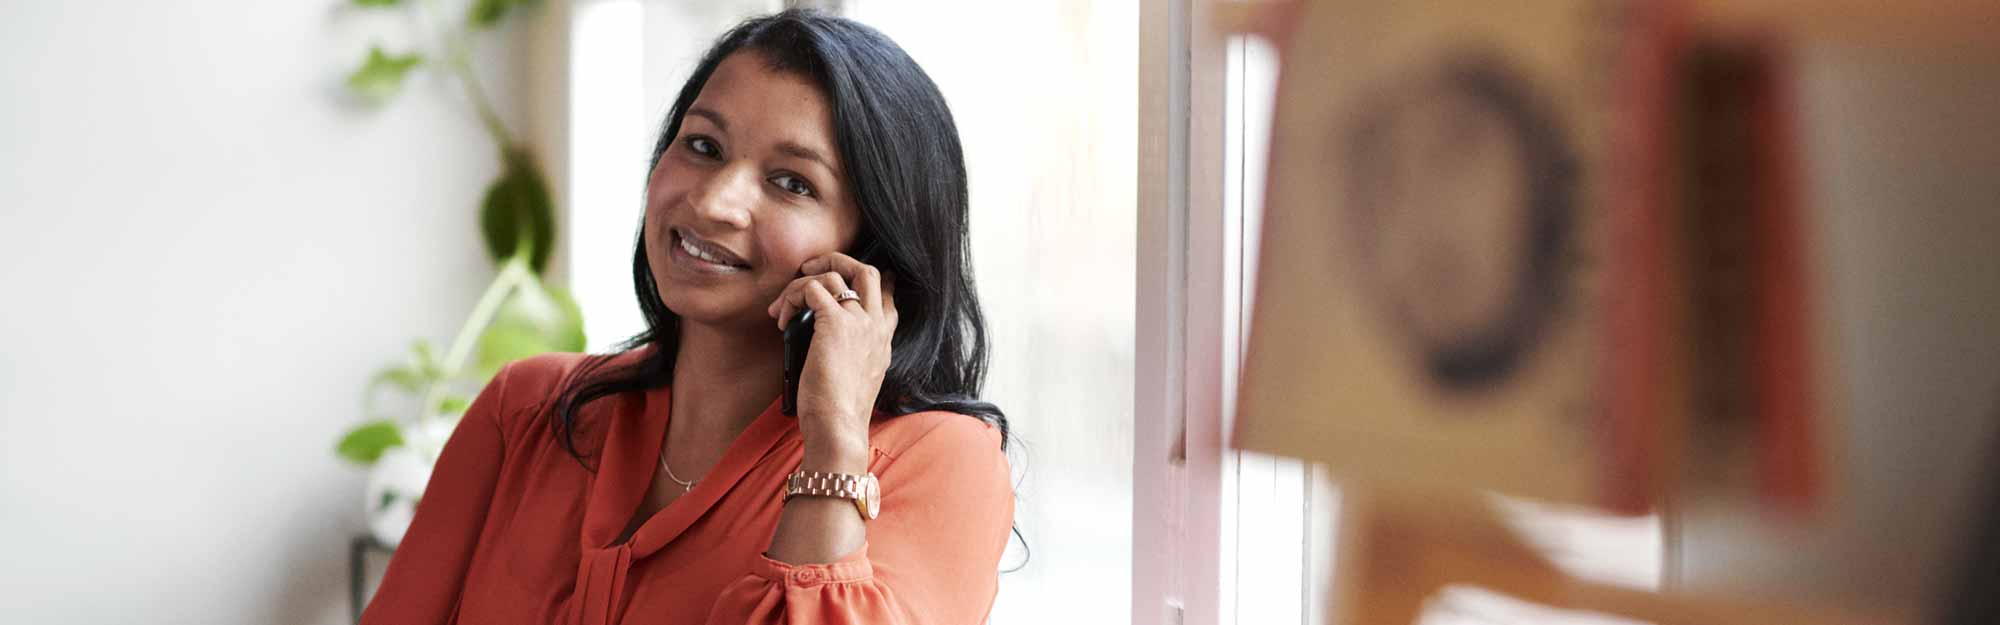 Leende affärskvinnan med orange blus talar i mobil